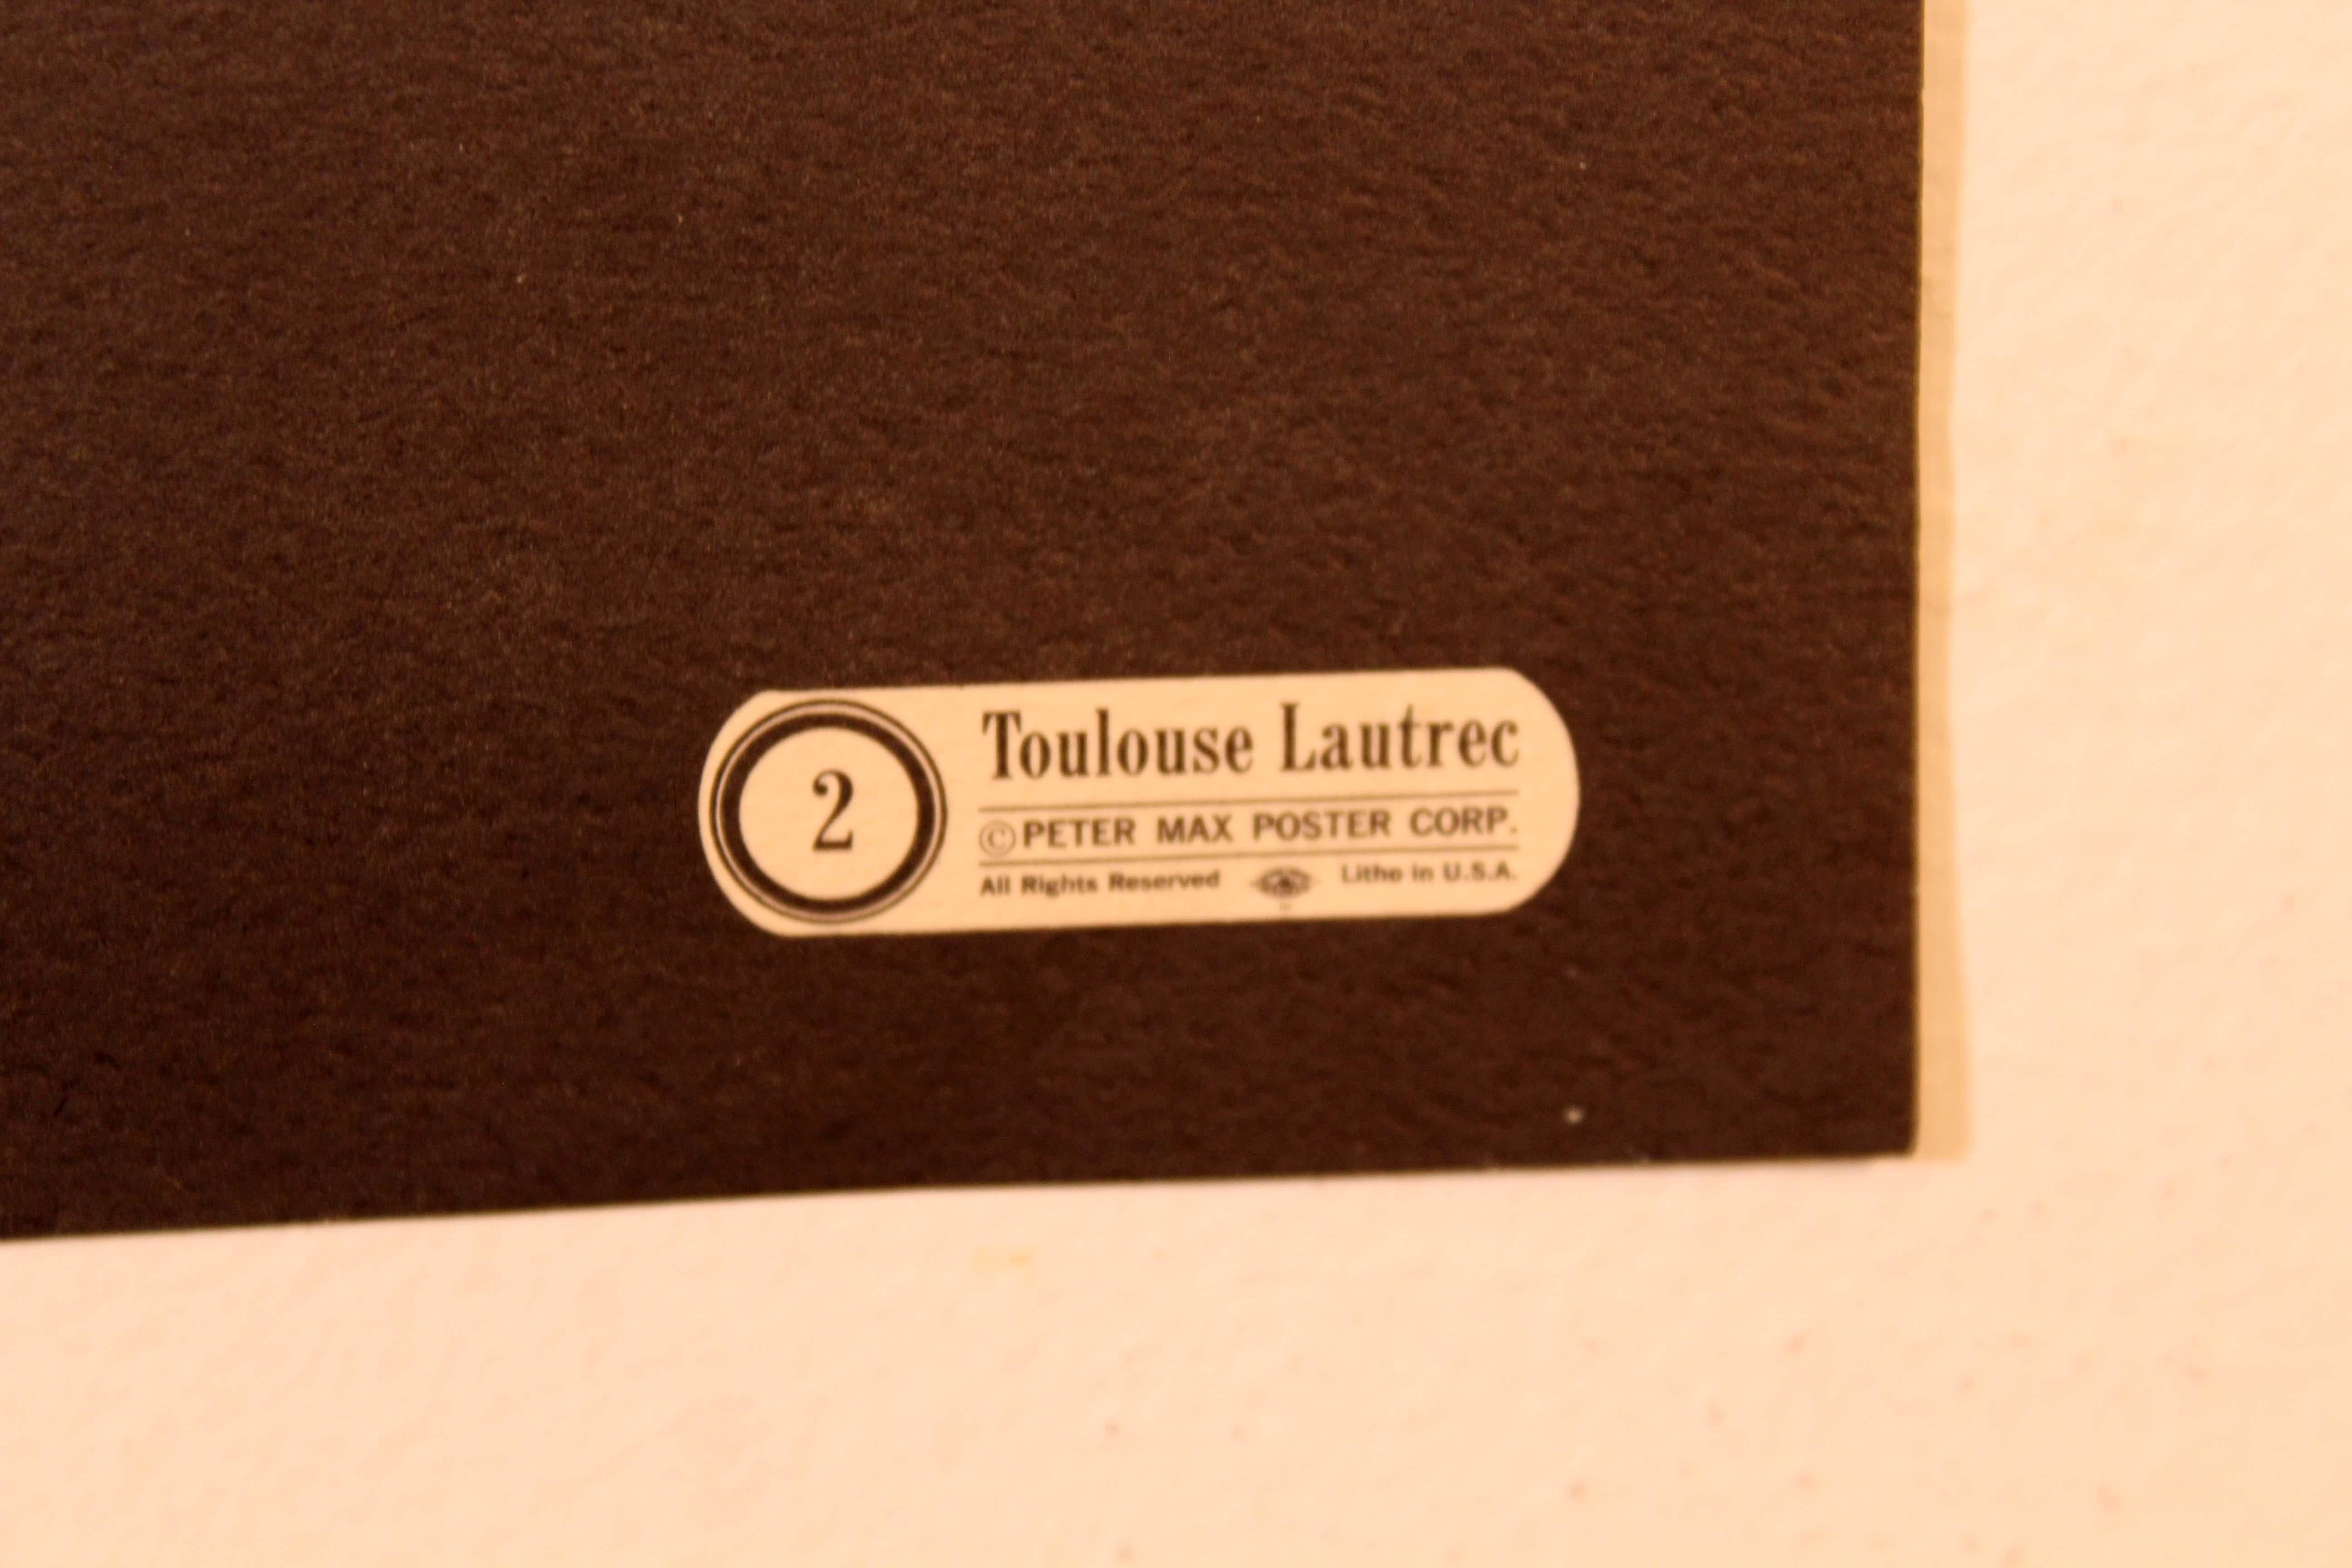 Peter Max Toulouse Lautrec 2 Signed Pop Art Retro Vintage Lithograph Poster 1967 For Sale 3